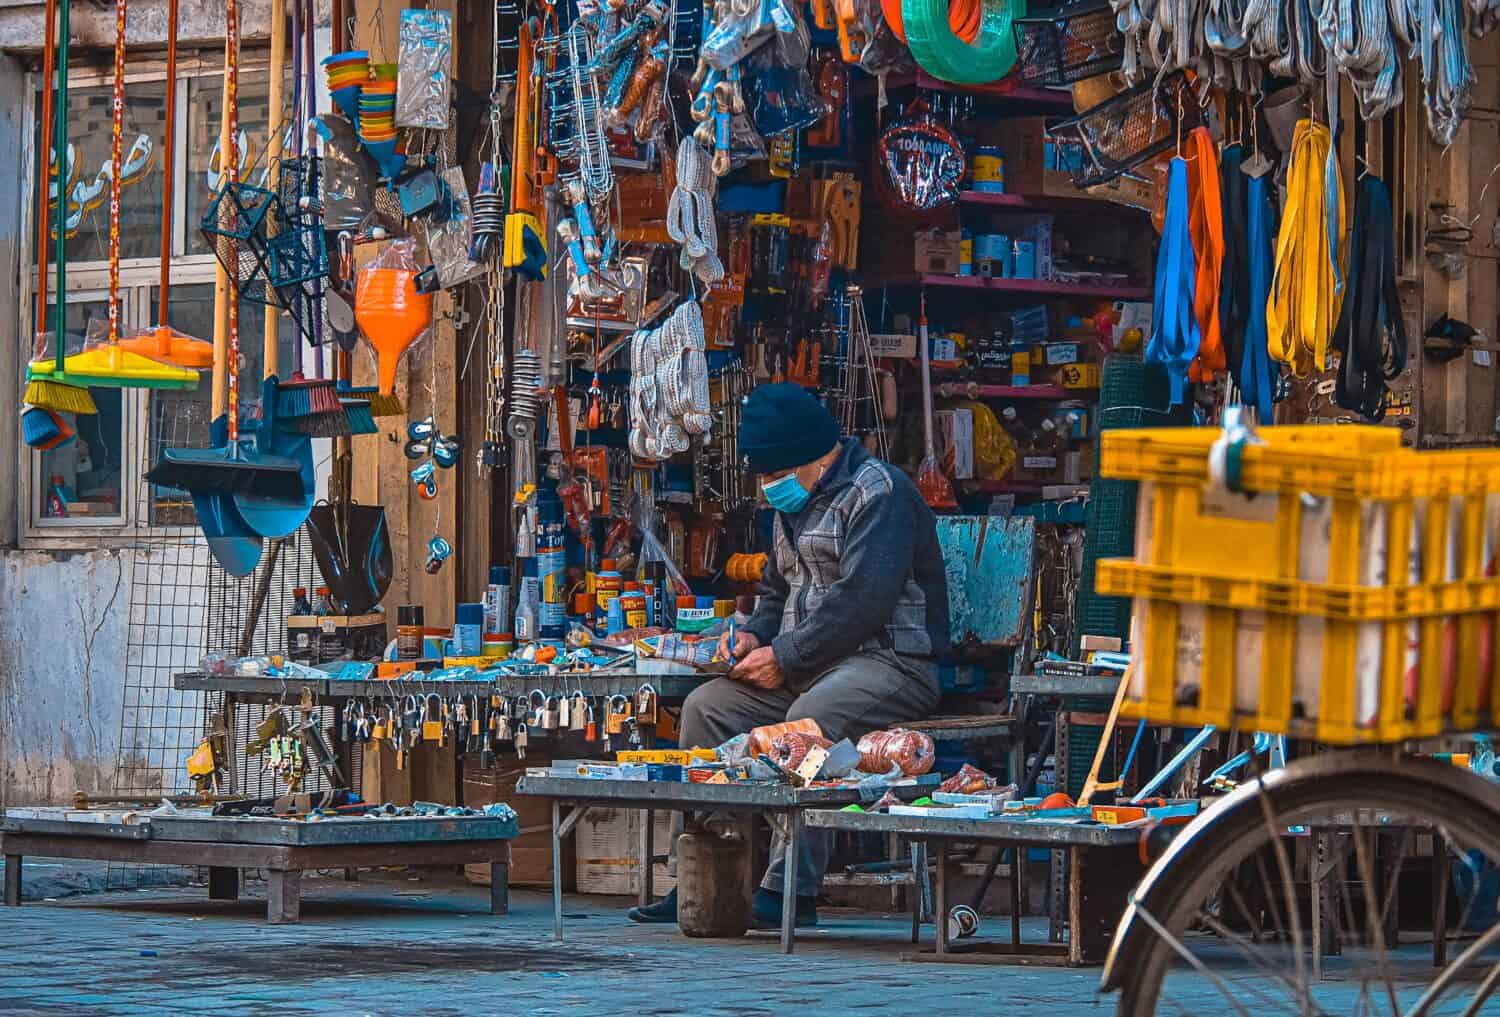 seller man, street, chamber, shop, old, Baghdad, by obaida